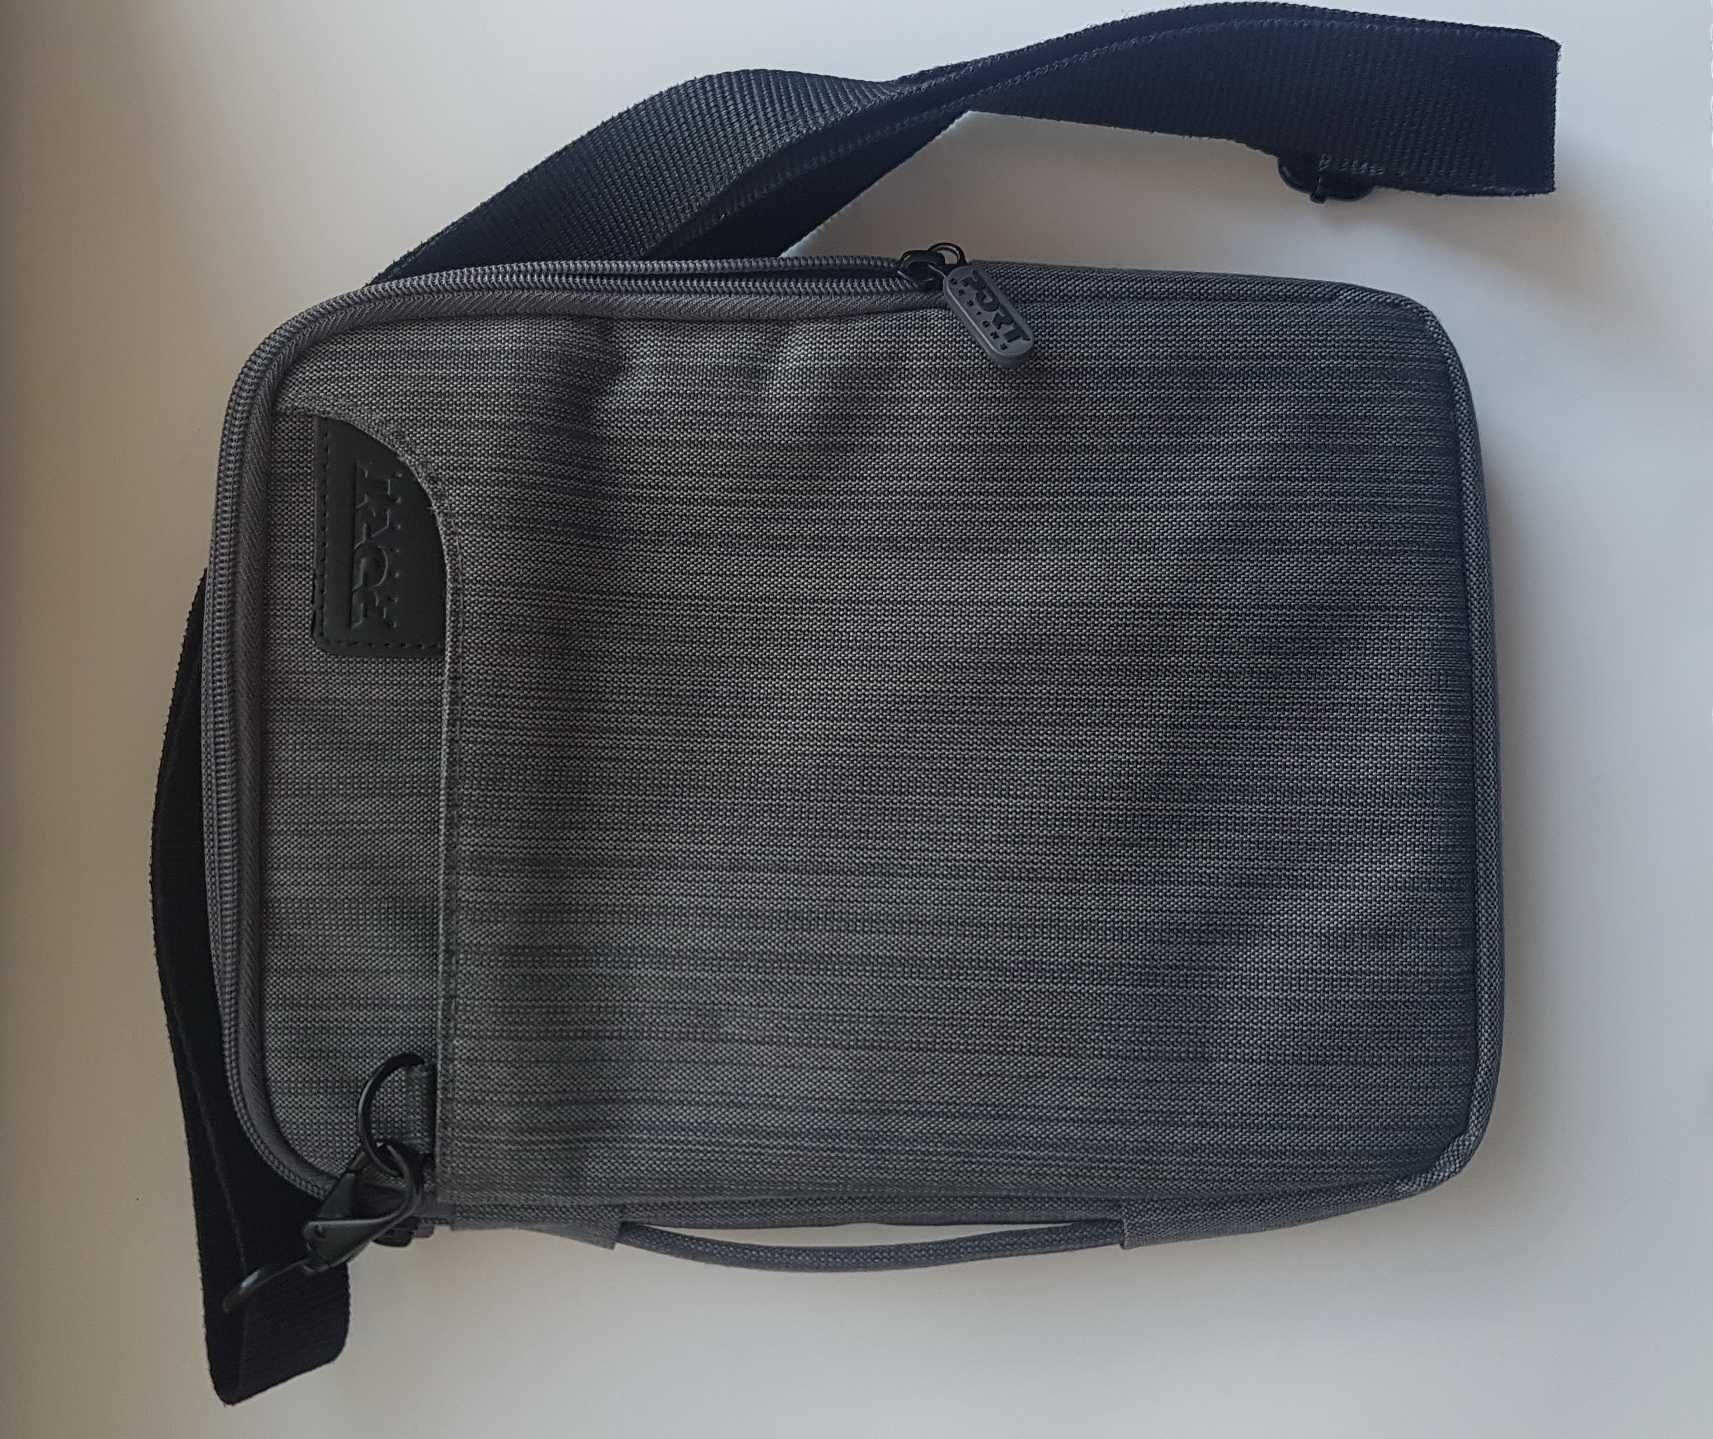 Cумка чехол для планшета PortDesigns Venice Tablet Bag 10,1 дюйма